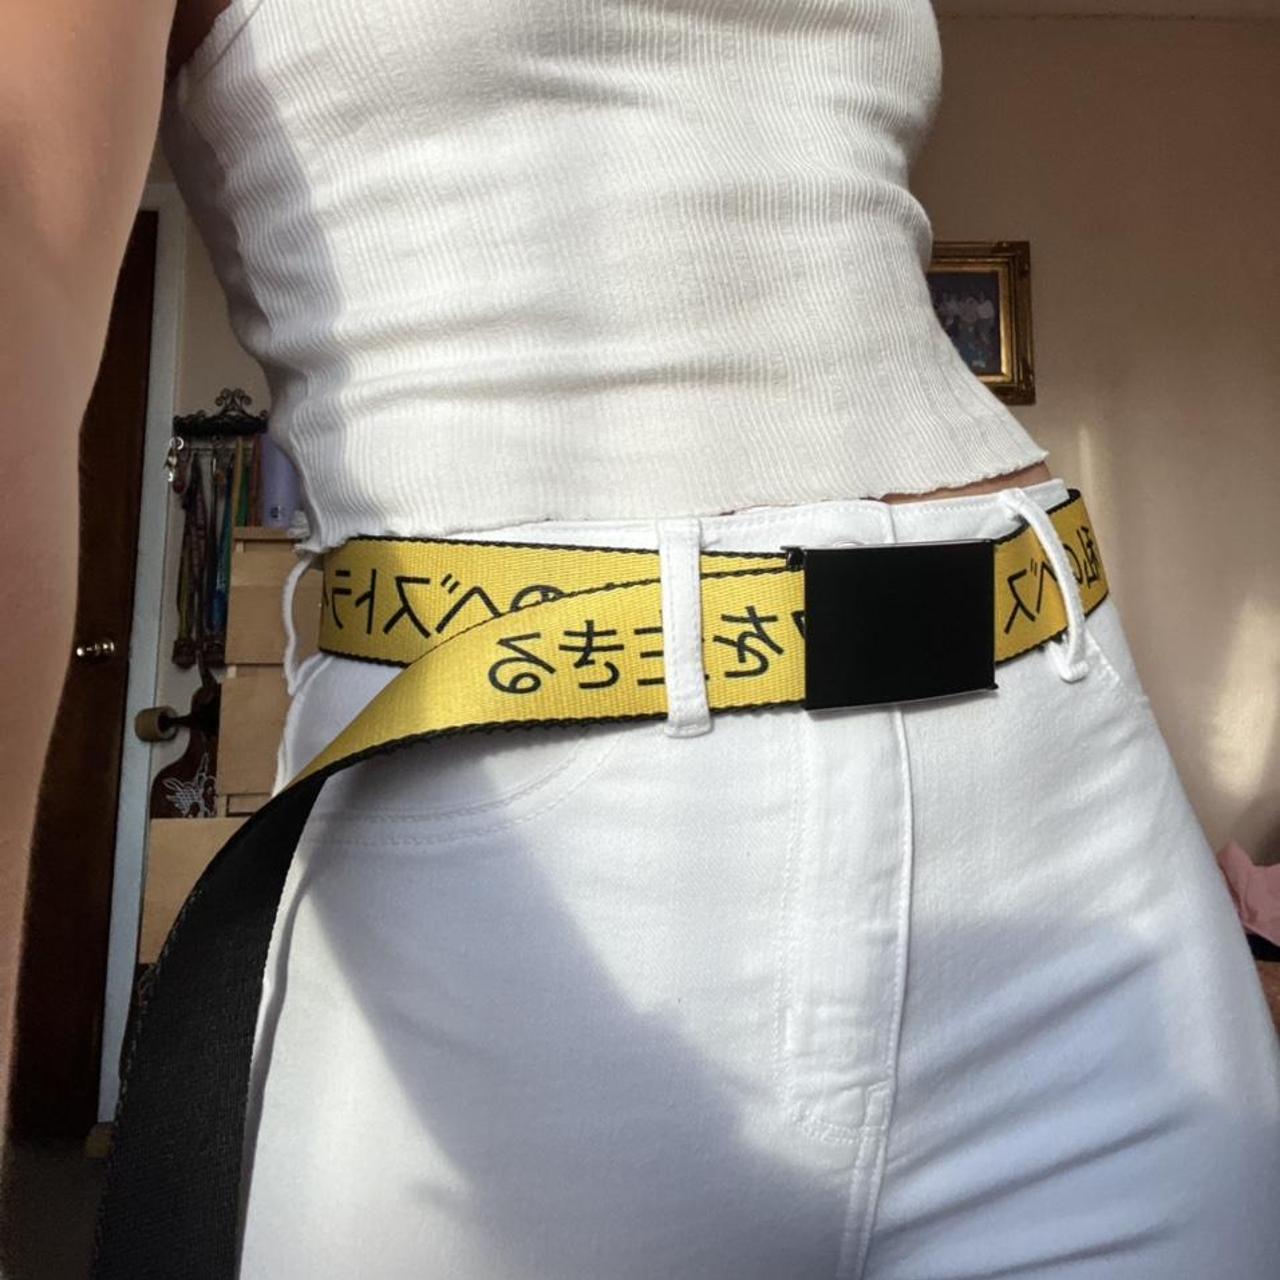 Zumiez Women's Yellow and Black Belt